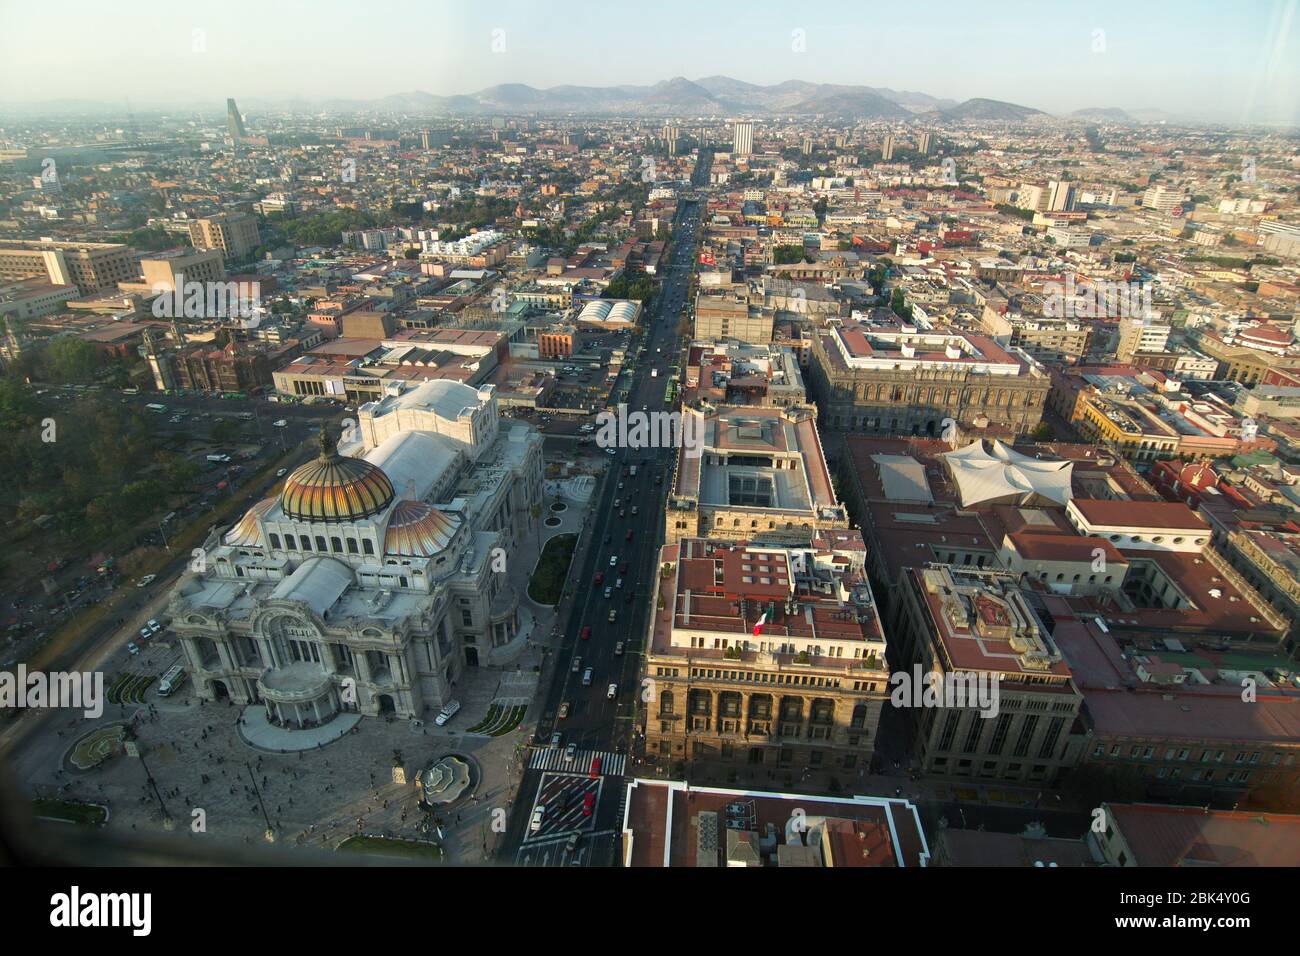 Mexico City, CDMX, Mexico - 2019: The Palacio de Bellas Artes (Palace of Fine Arts) and Alameda Central park as seen from the Torre Latinoamericana. Stock Photo